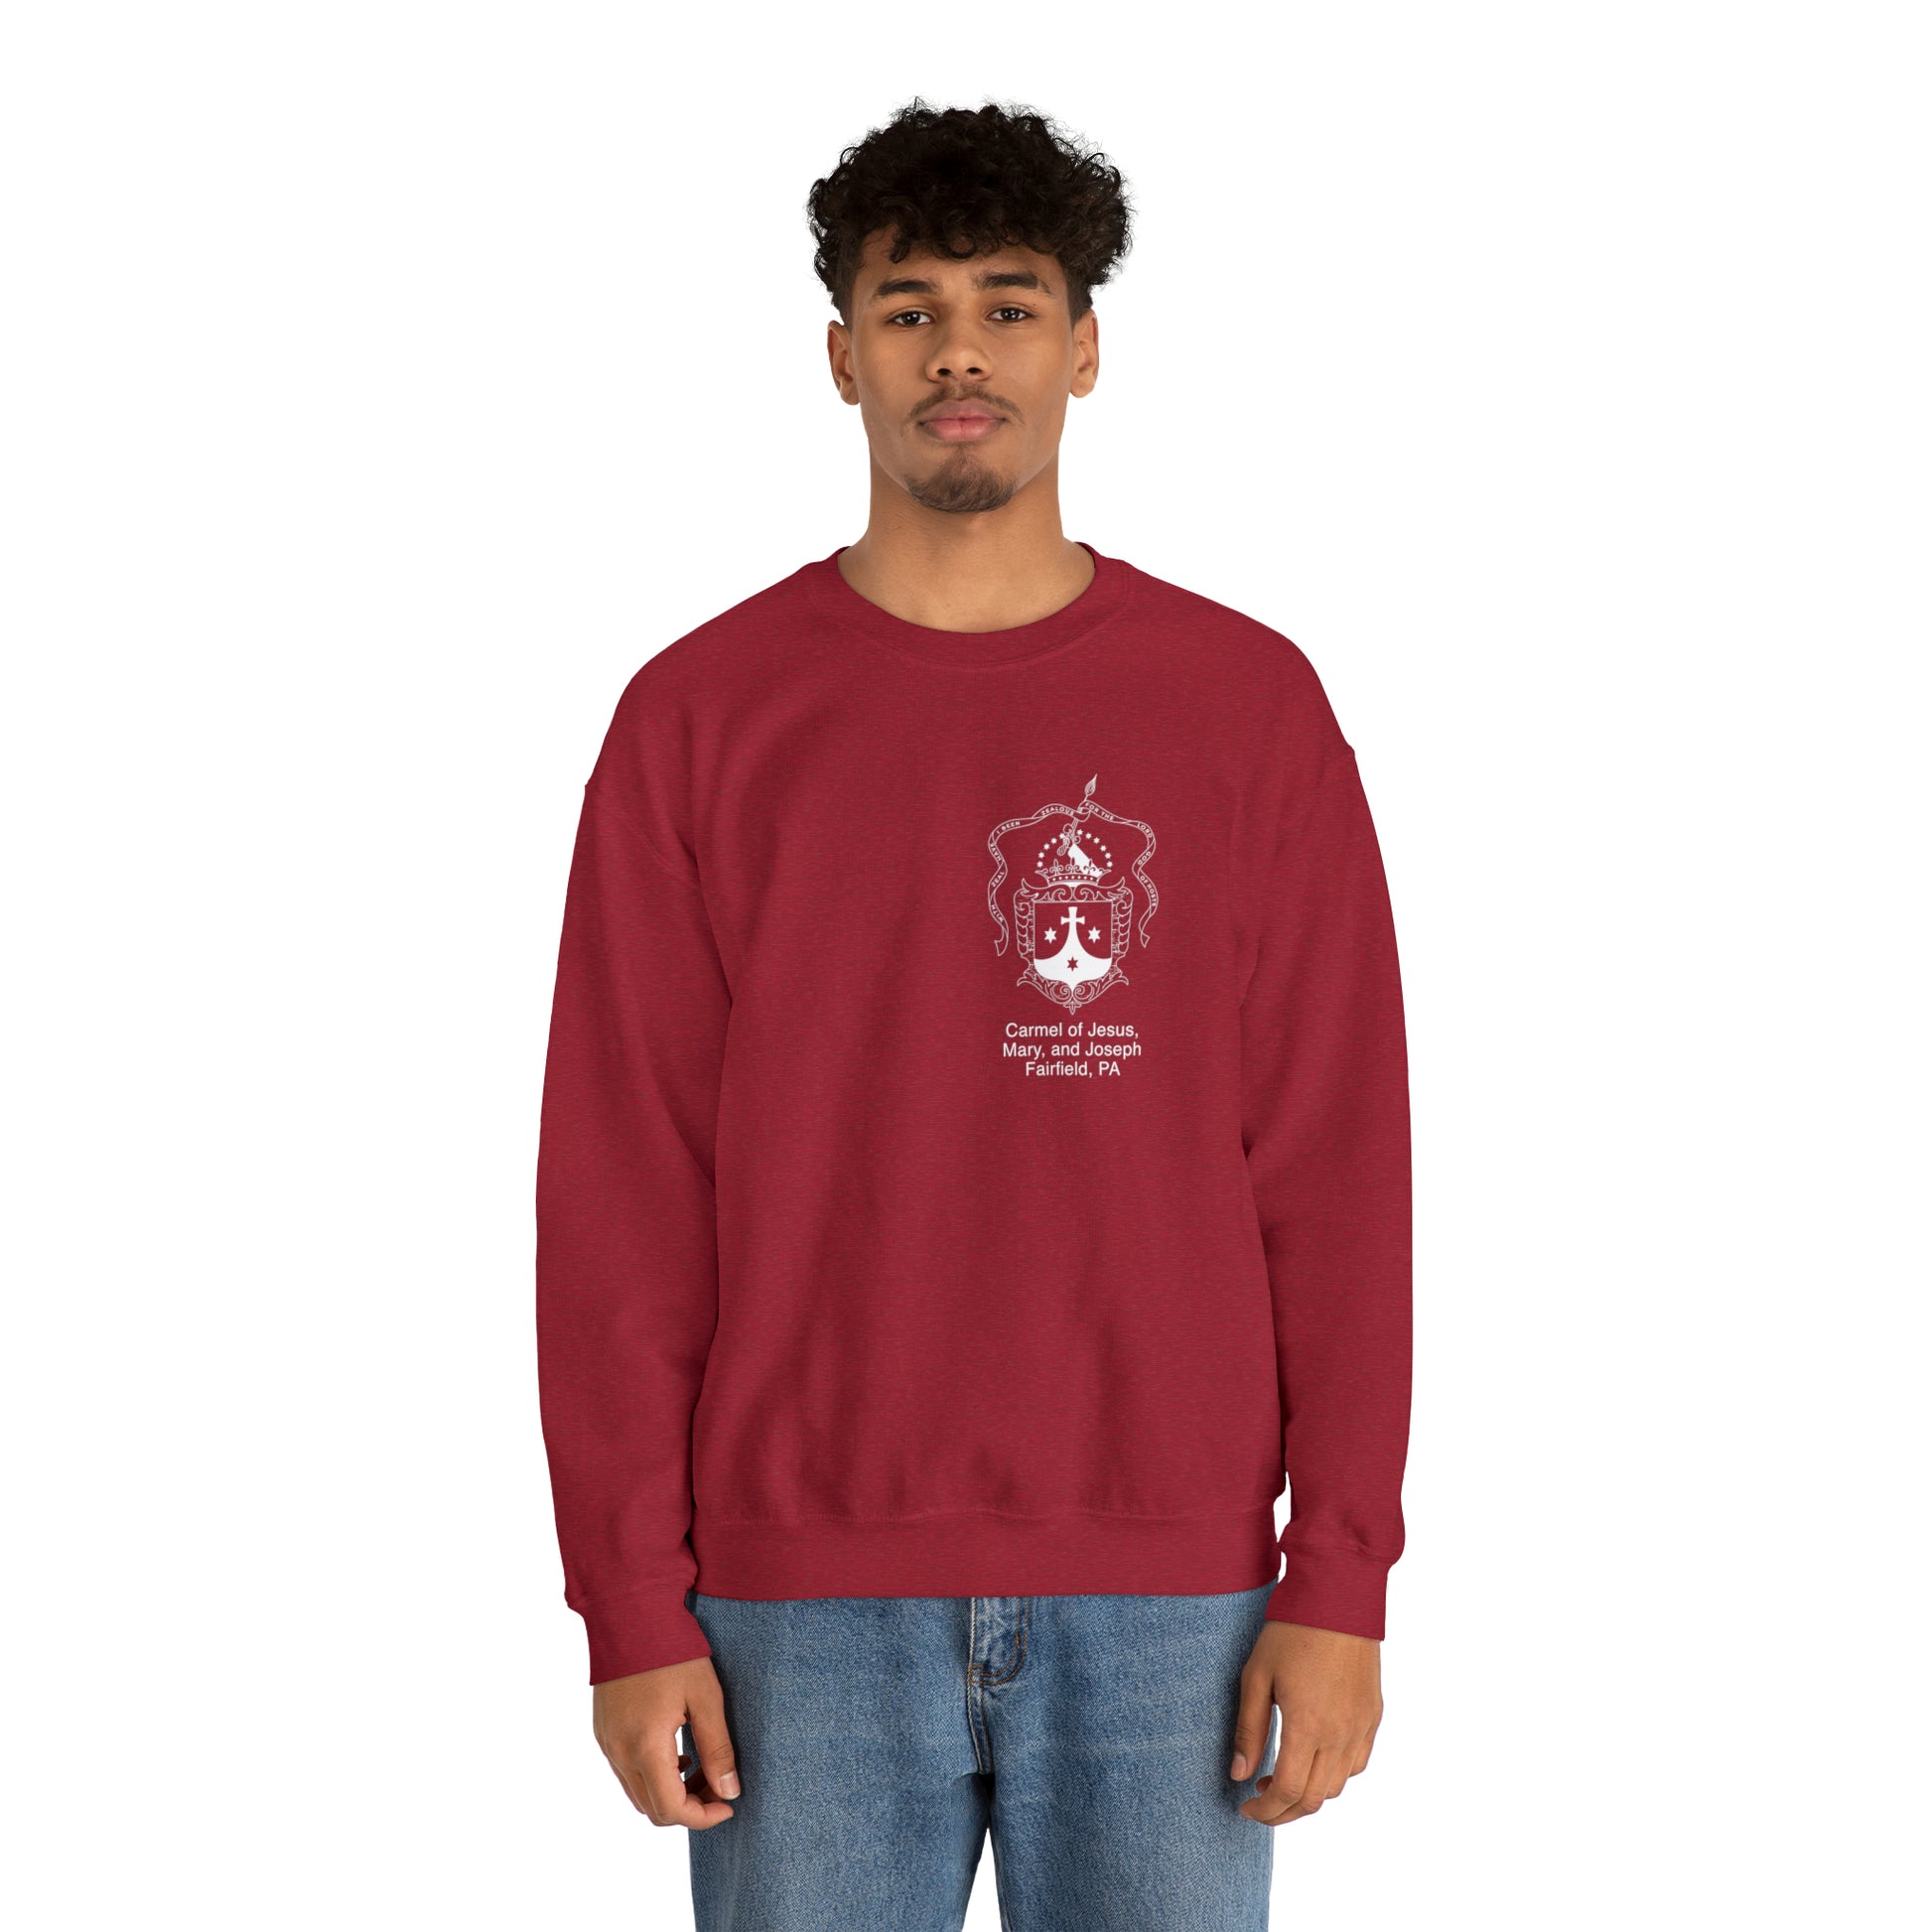  Caramel crew-neck sweater with logo